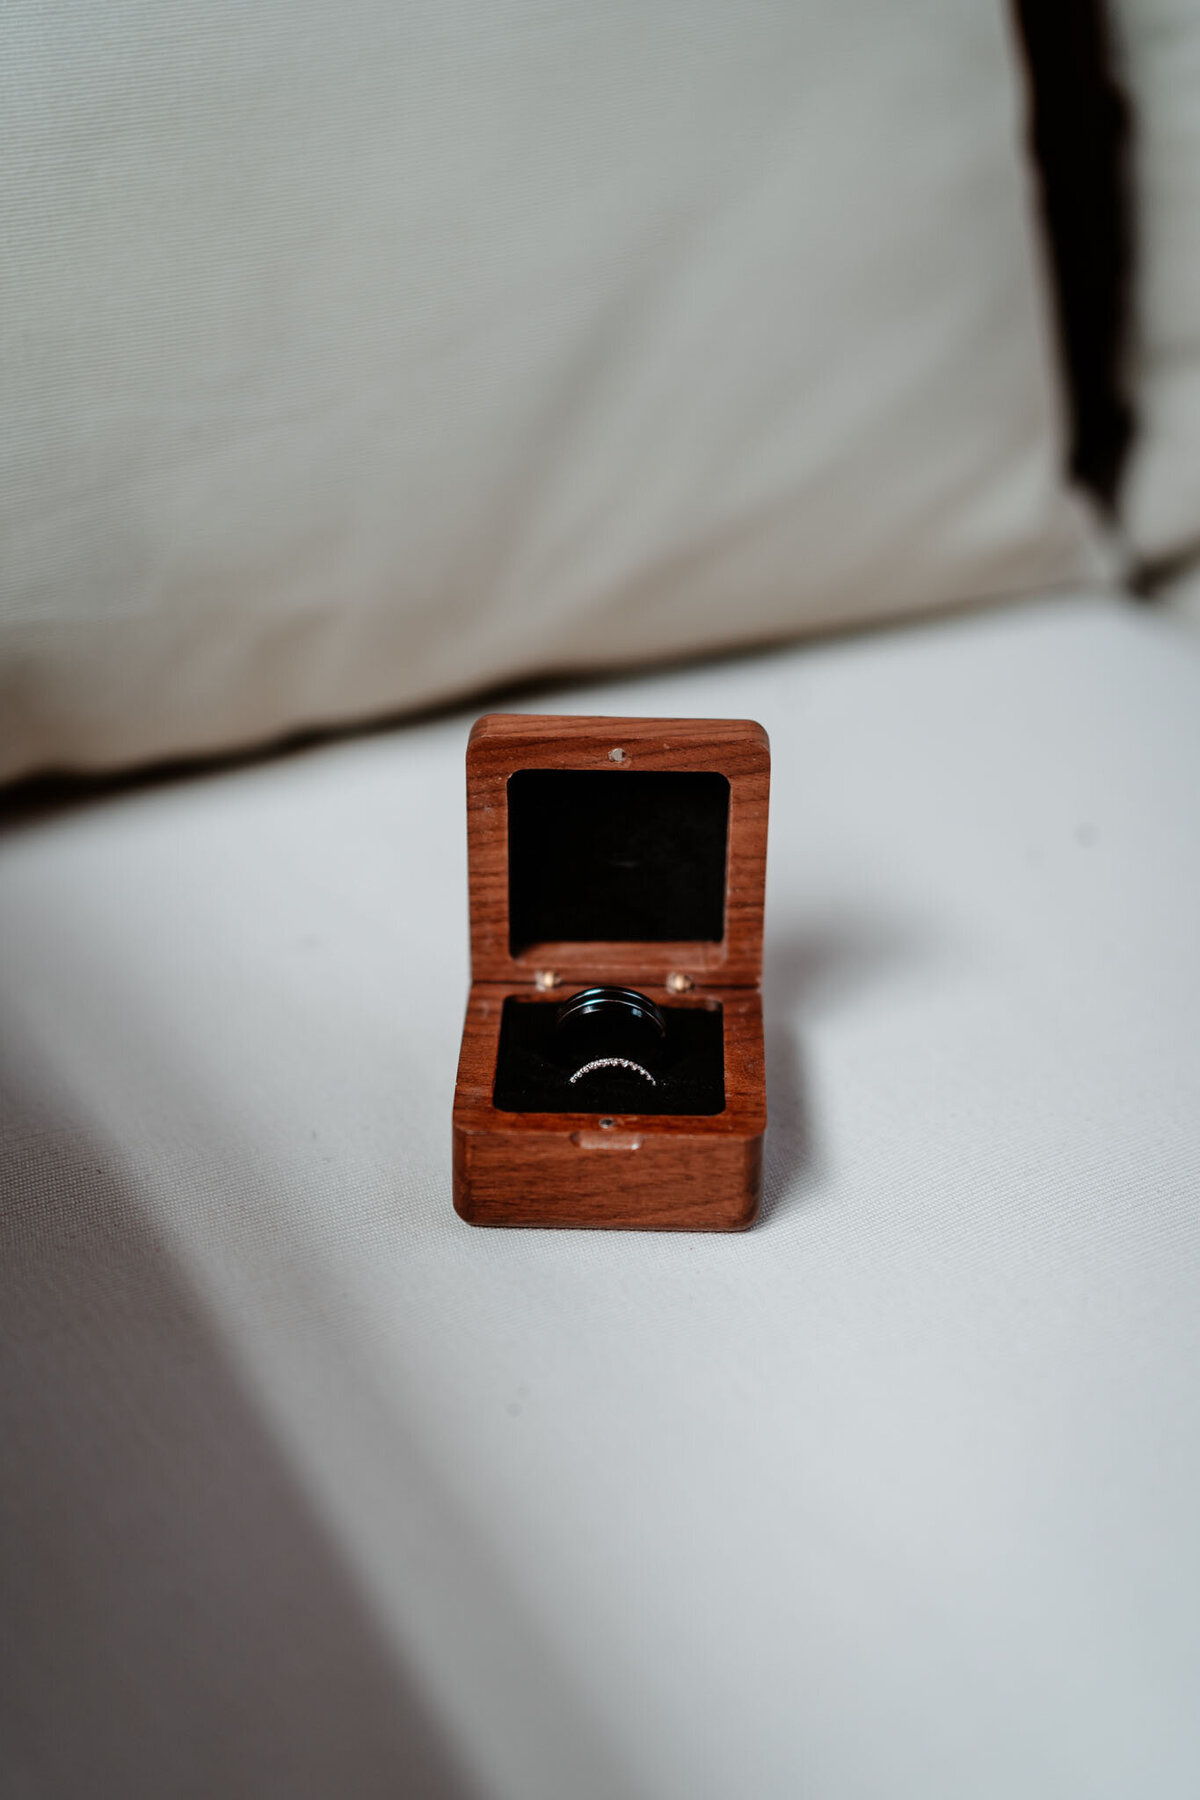 A couple's wedding ring